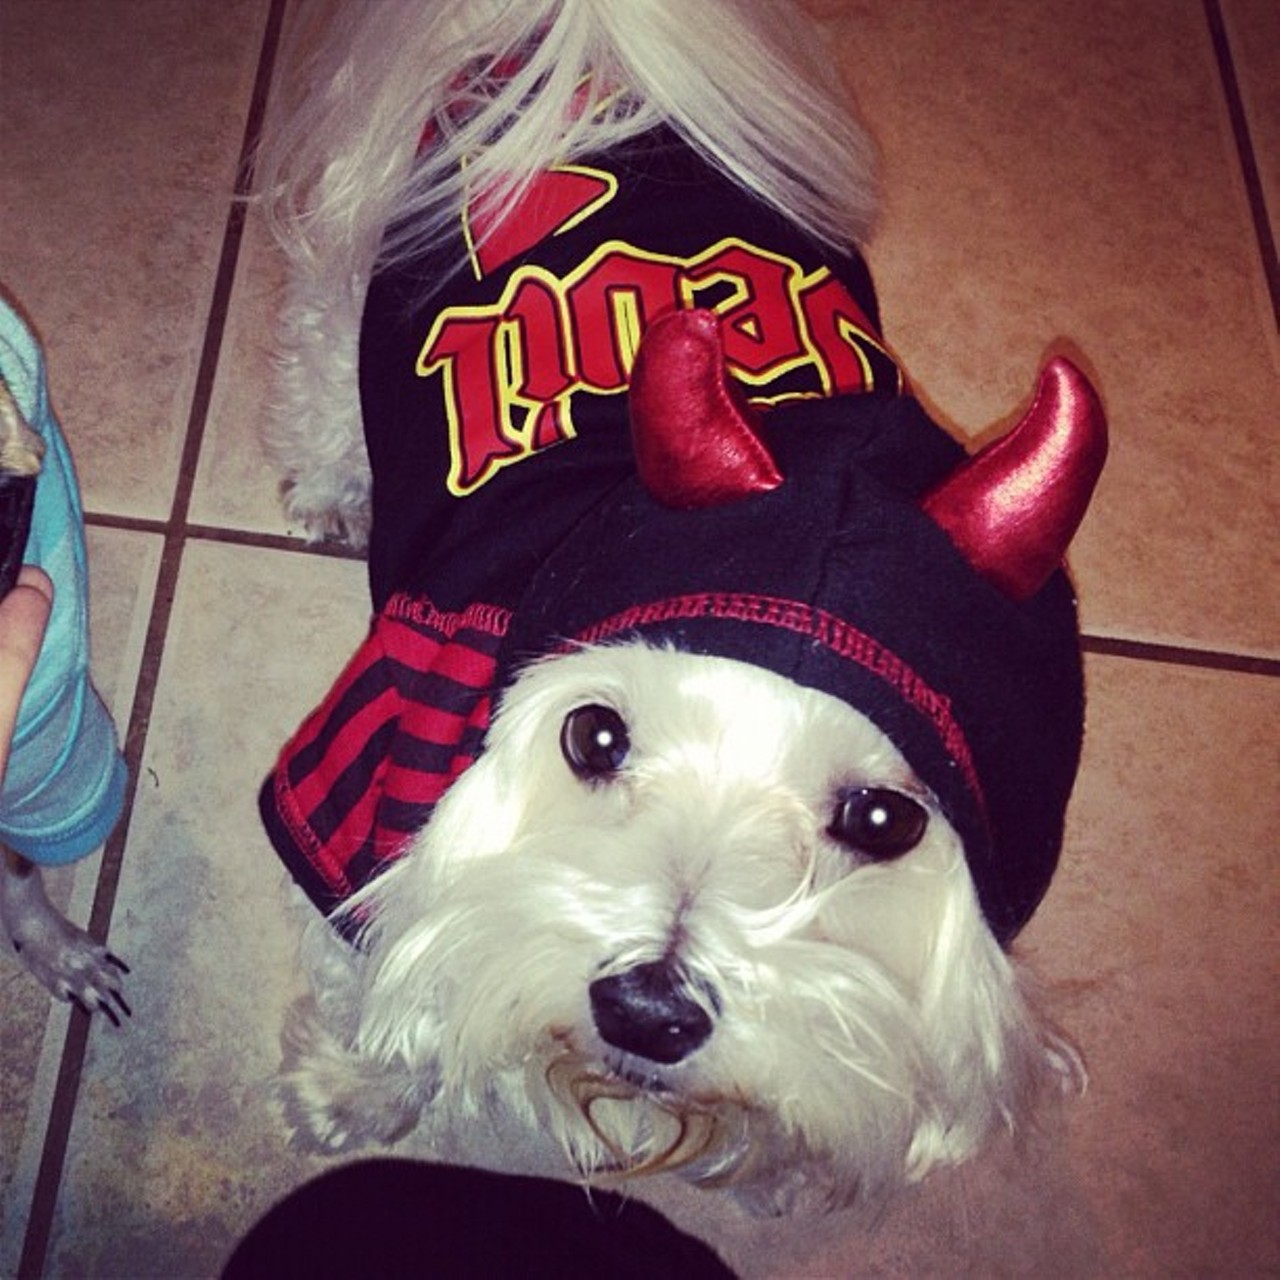 @mariangeles_ica
My little devil emoji emojiemoji #dog #pets #devil #halloween #maltese